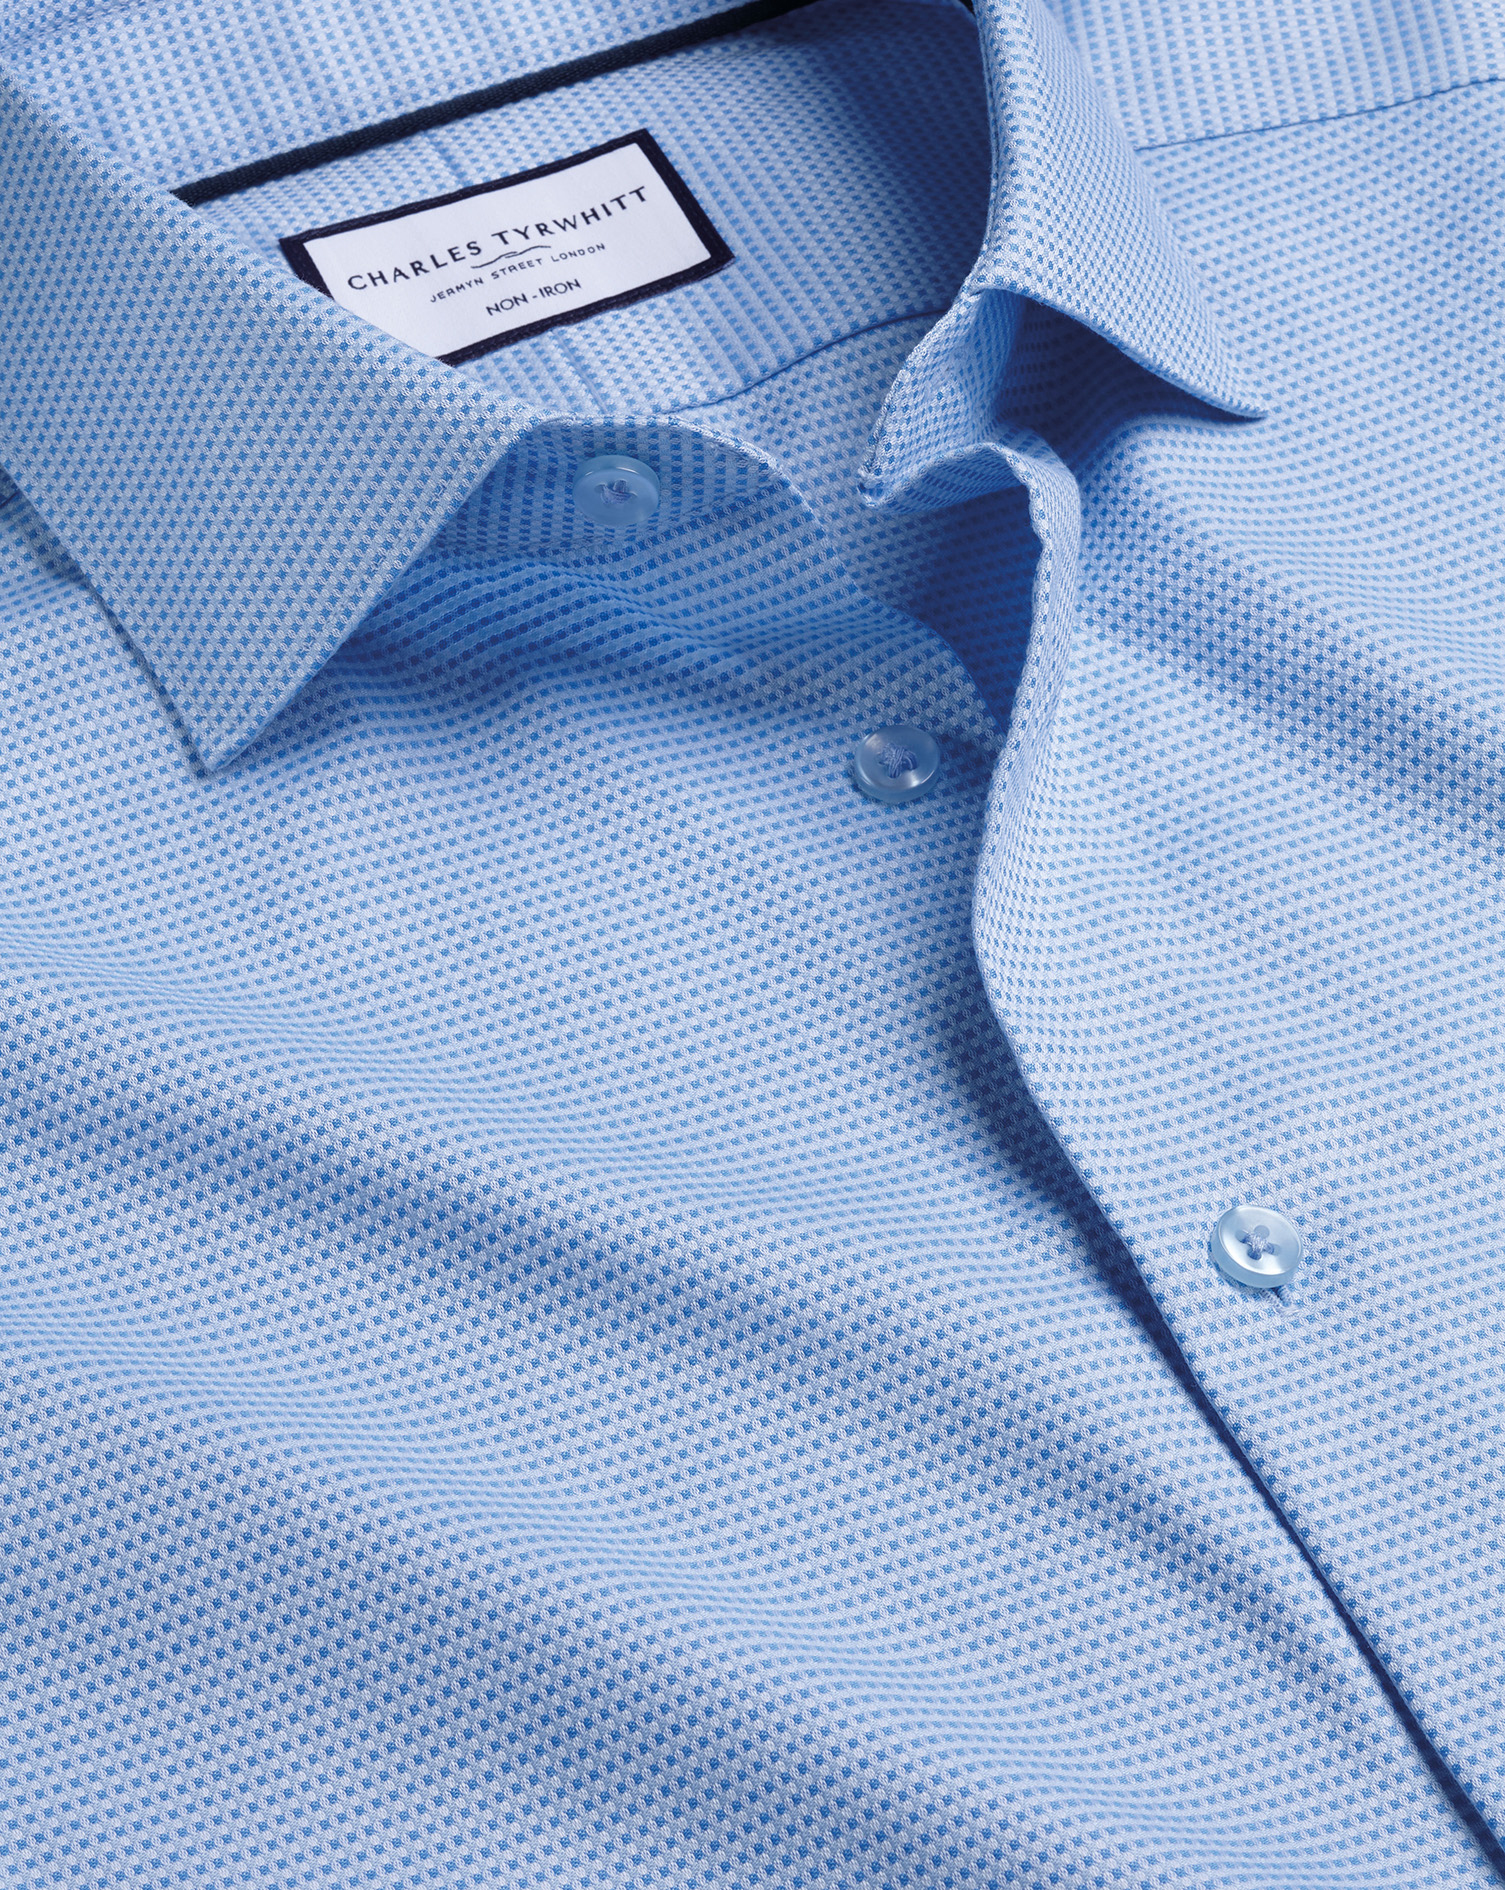 Men's Charles Tyrwhitt Non-Iron Stretch Texture Square Dress Shirt - Sky Blue Single Cuff Size XL Co